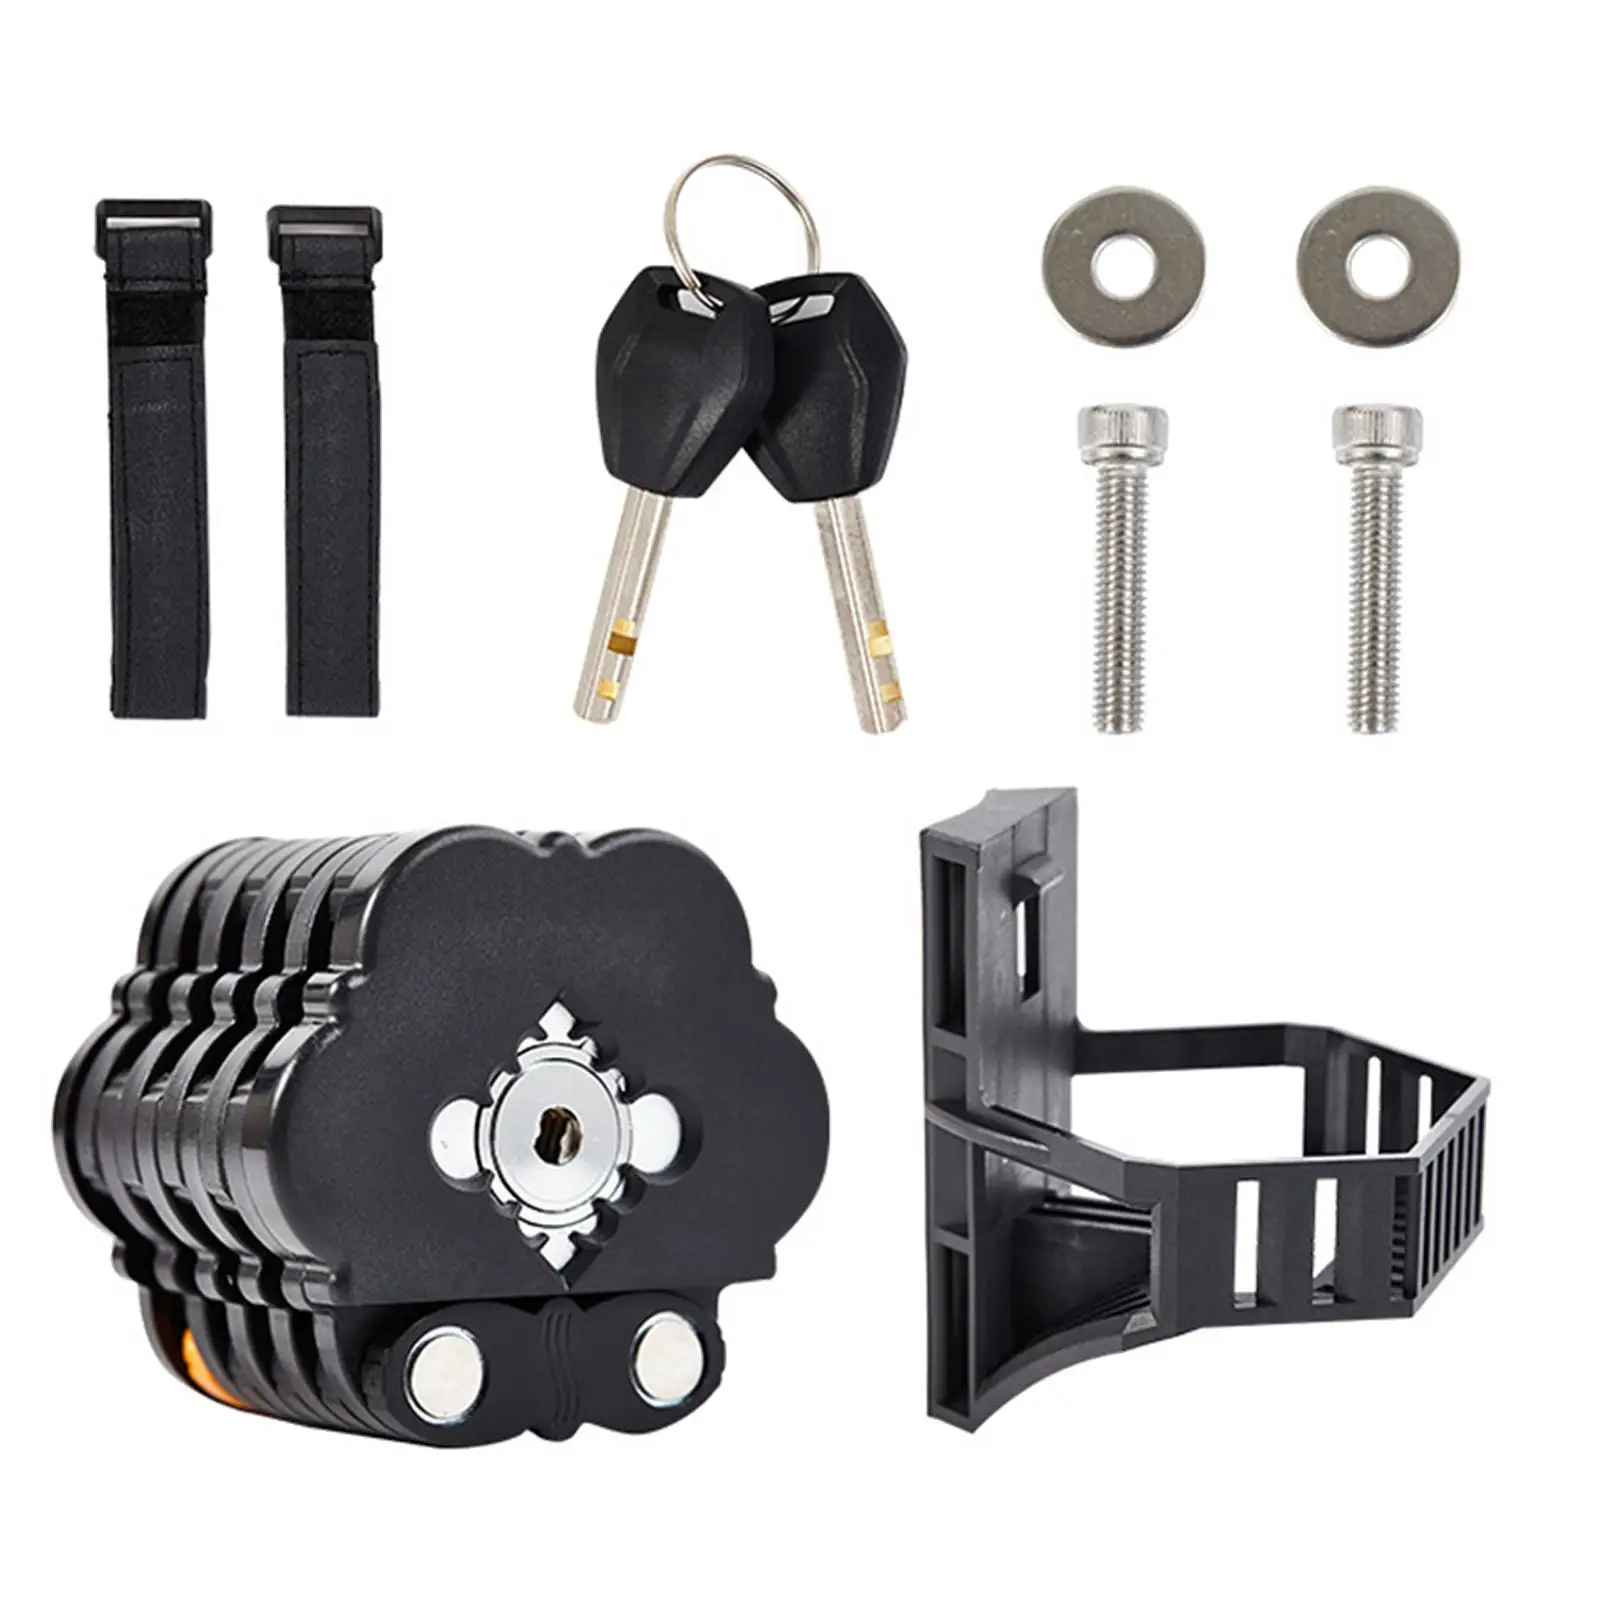 Folding Bike Lock Strong Security Parts Accessories Bike Chain Lock Anti Theft Bicycle Lock for Bicycle Mountain Bike Road Bike